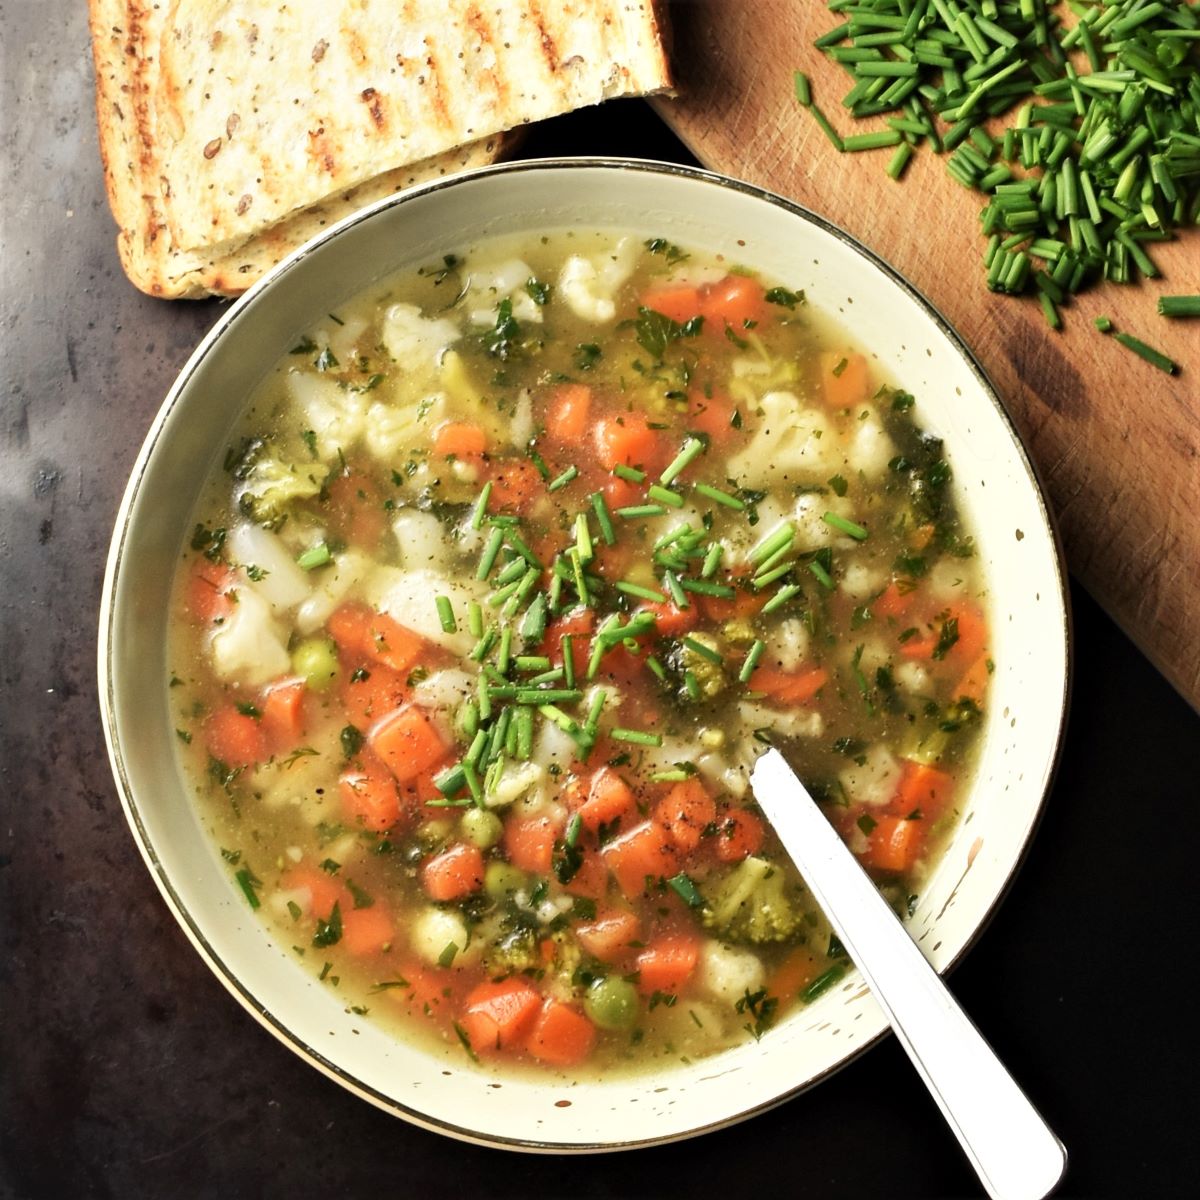 https://www.everydayhealthyrecipes.com/wp-content/uploads/2021/04/chunky-vegetable-soup.jpg